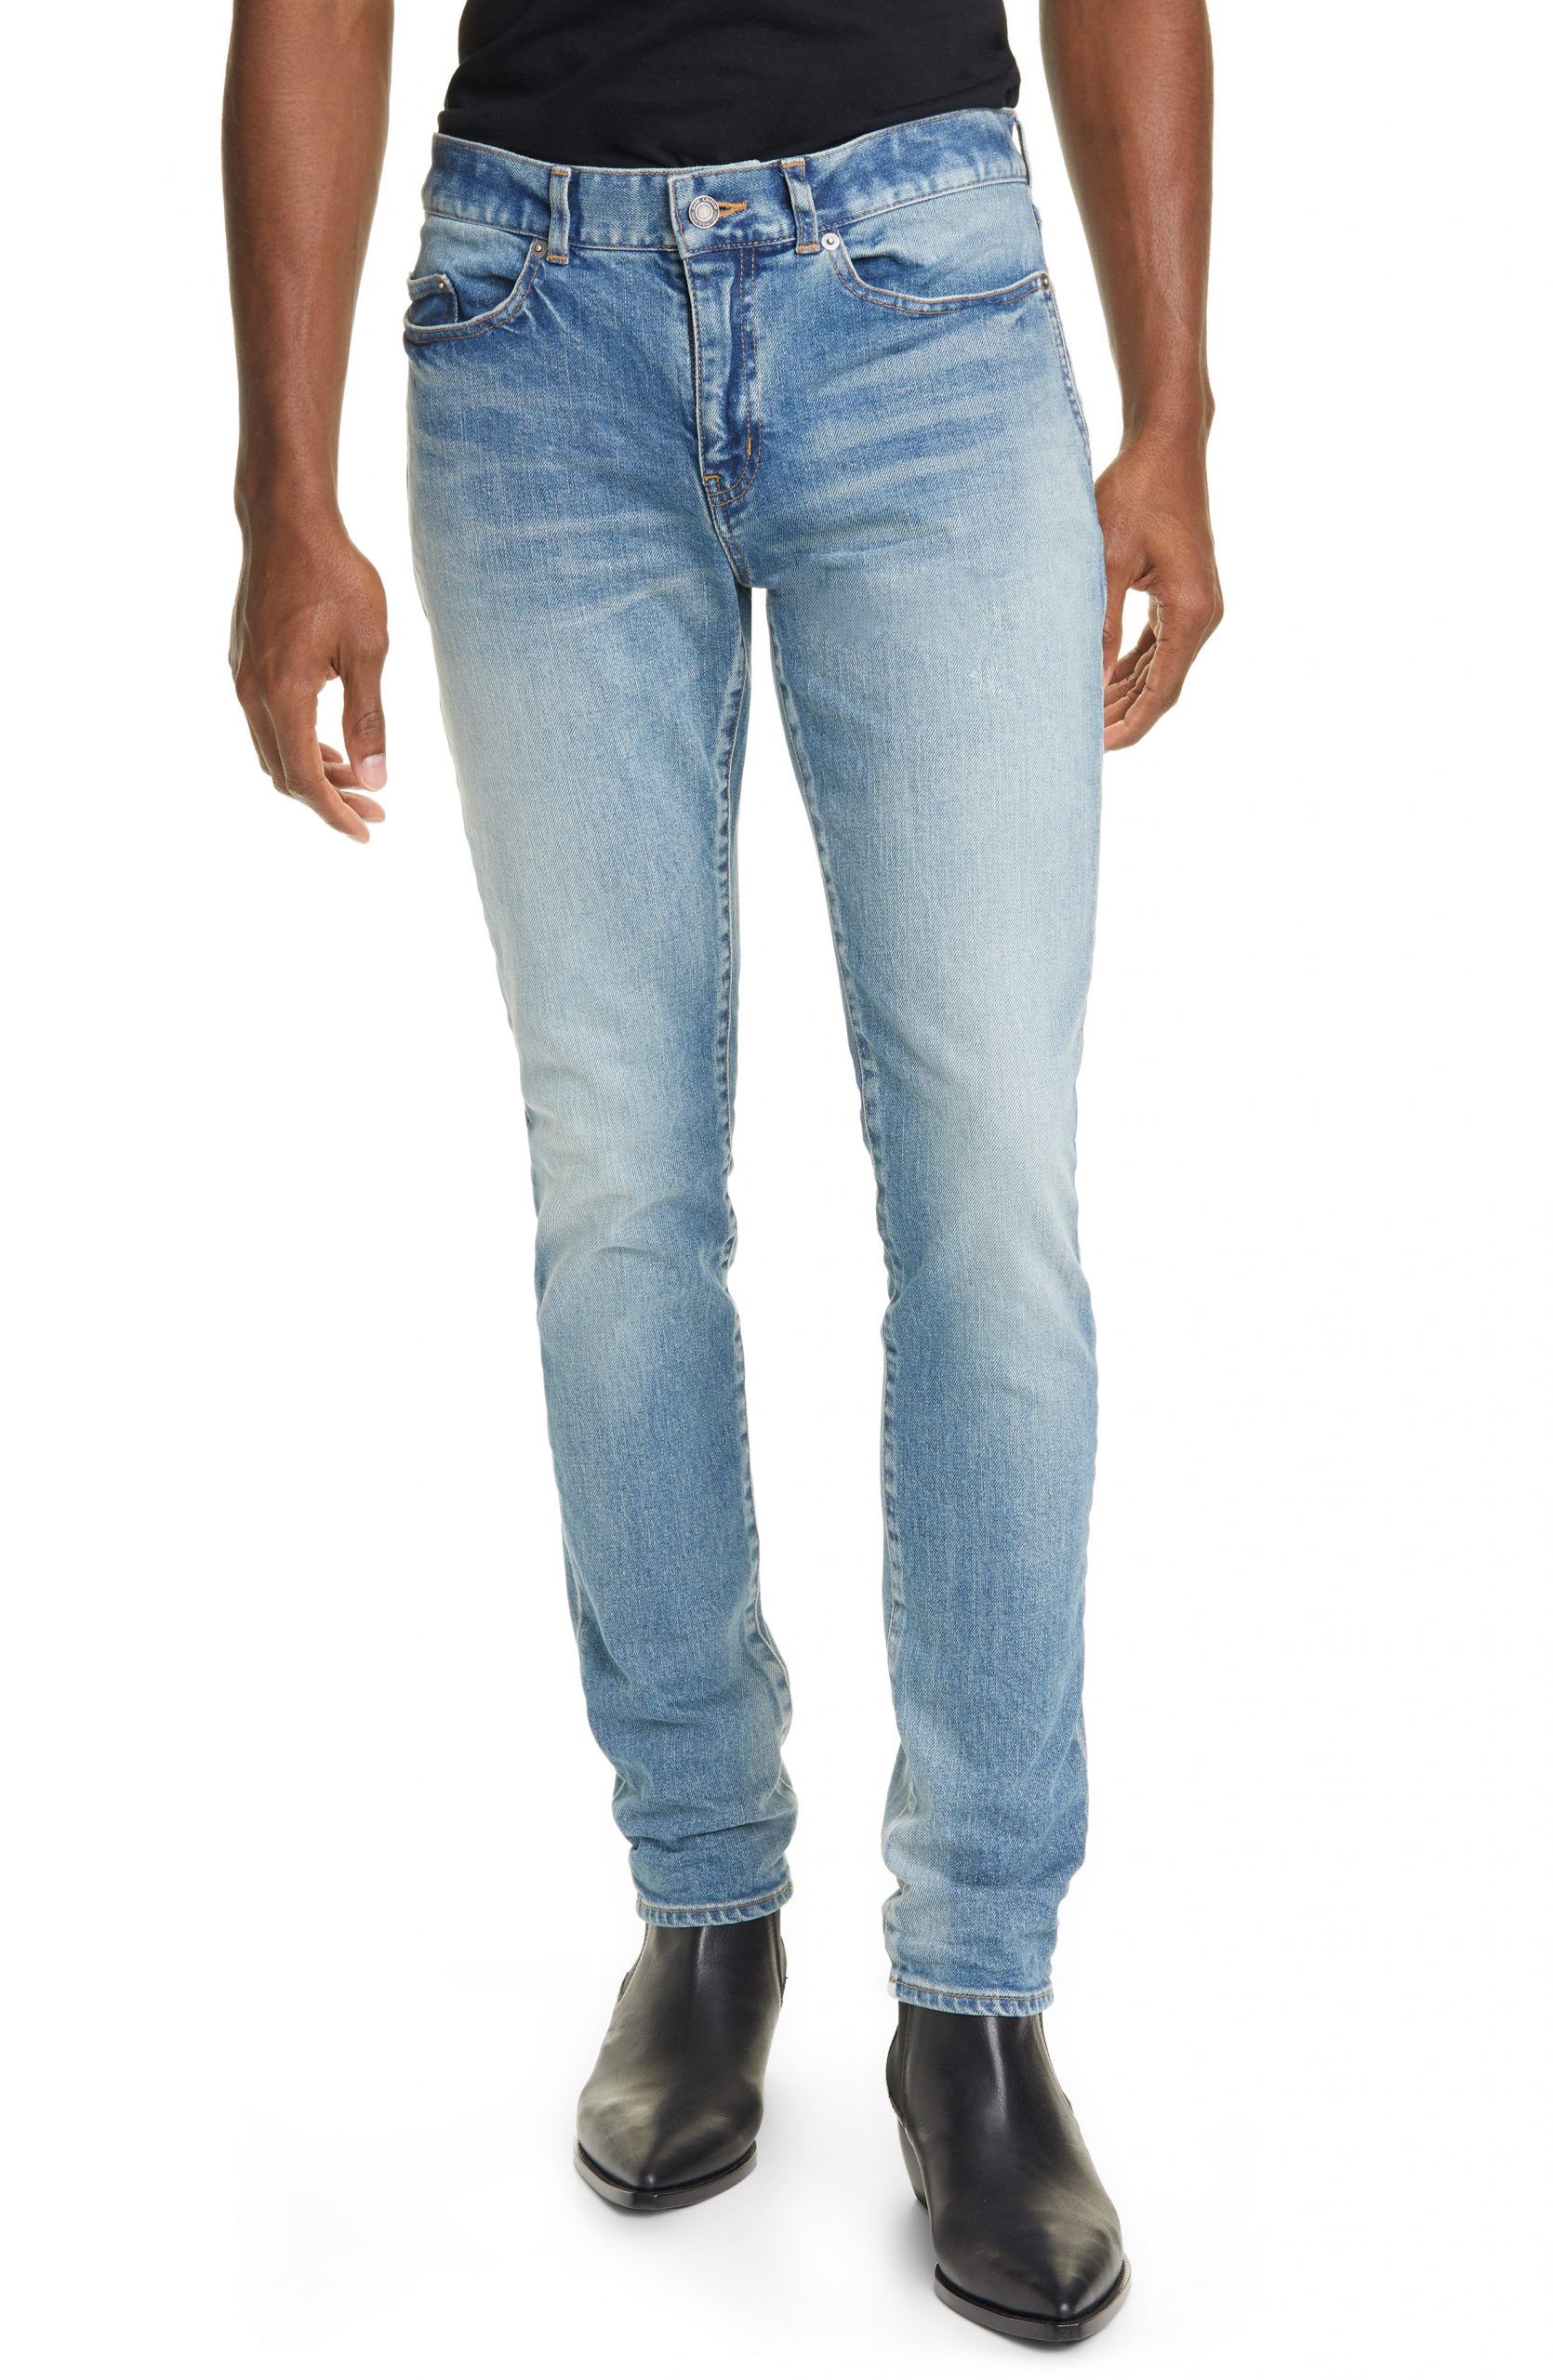 jeans size 36